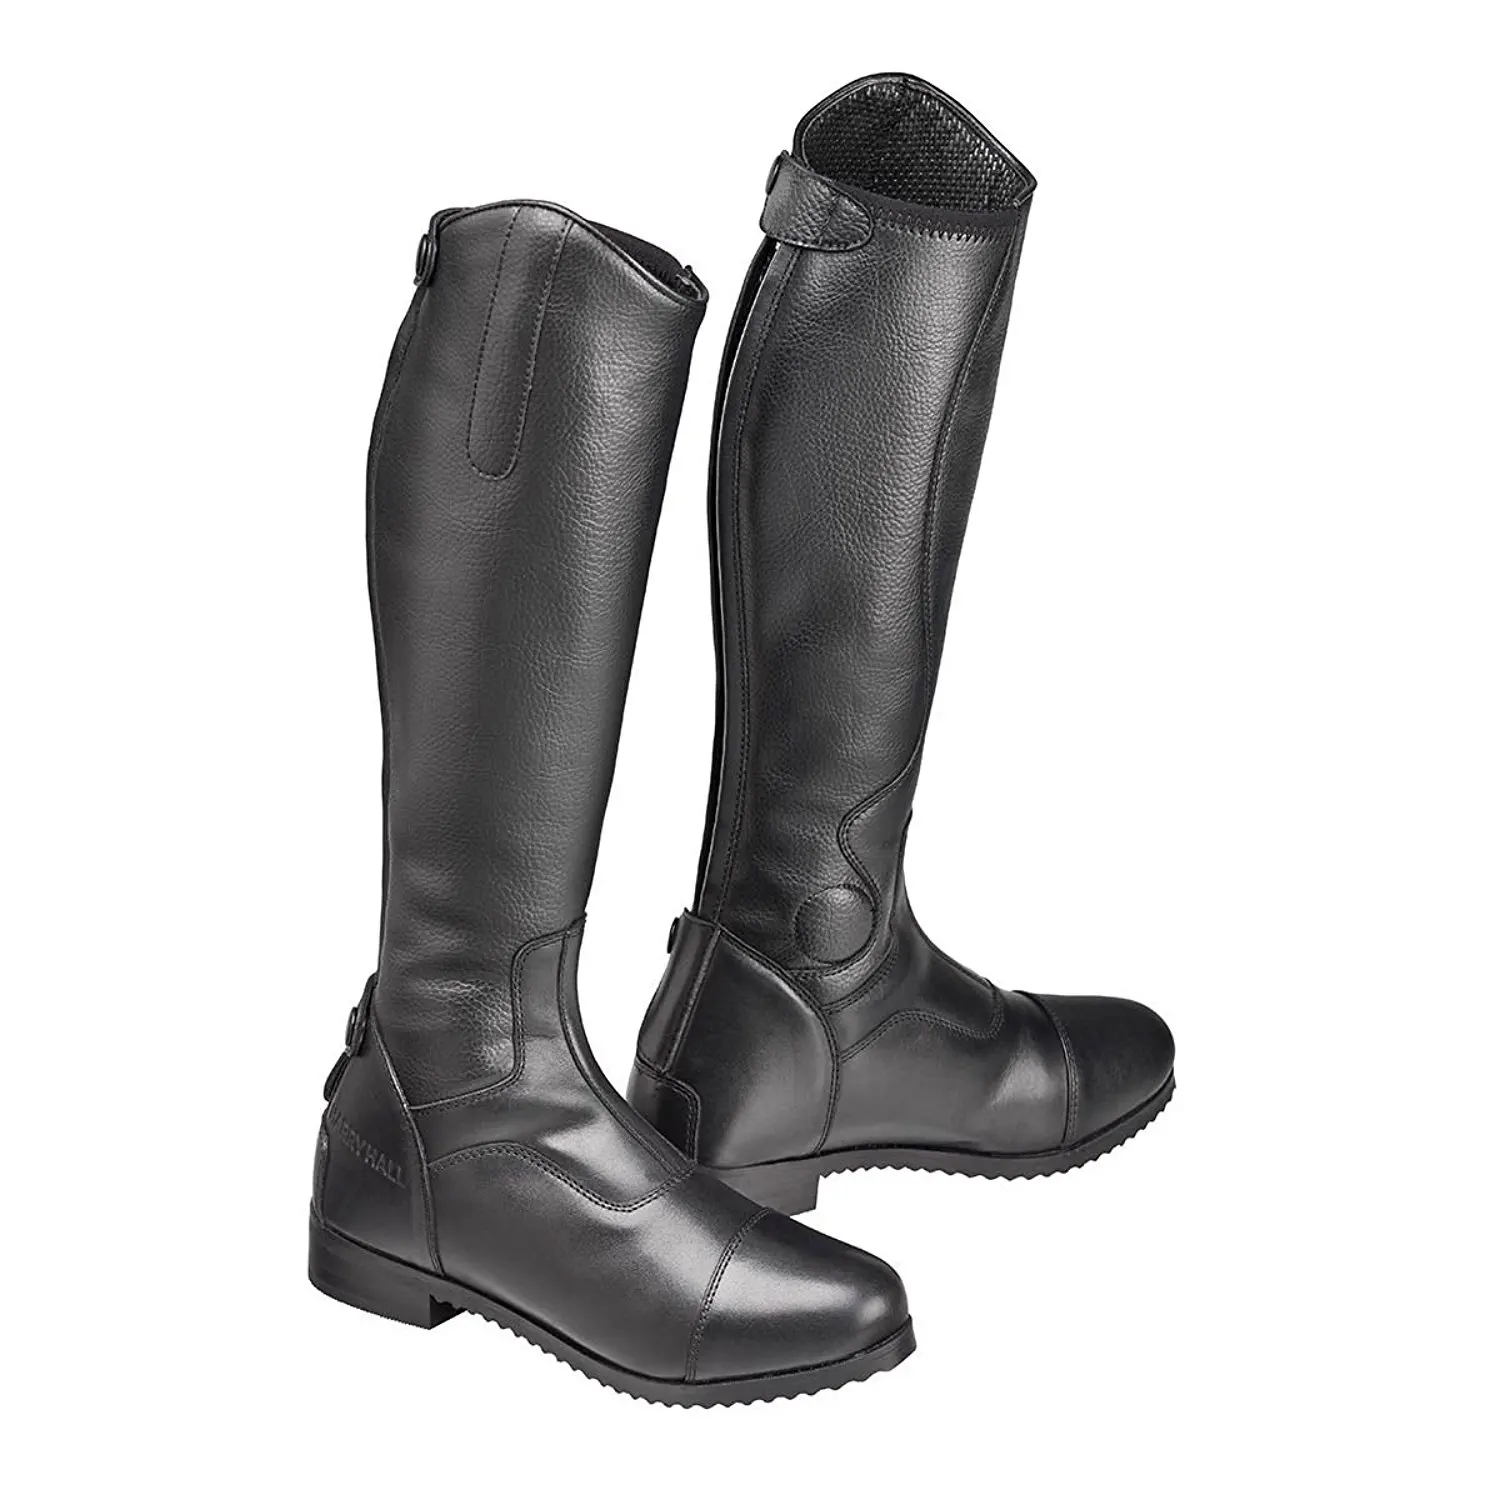 Size 11 Black Edlington Boot Long Harry Hall Men's Leather Riding Boots 